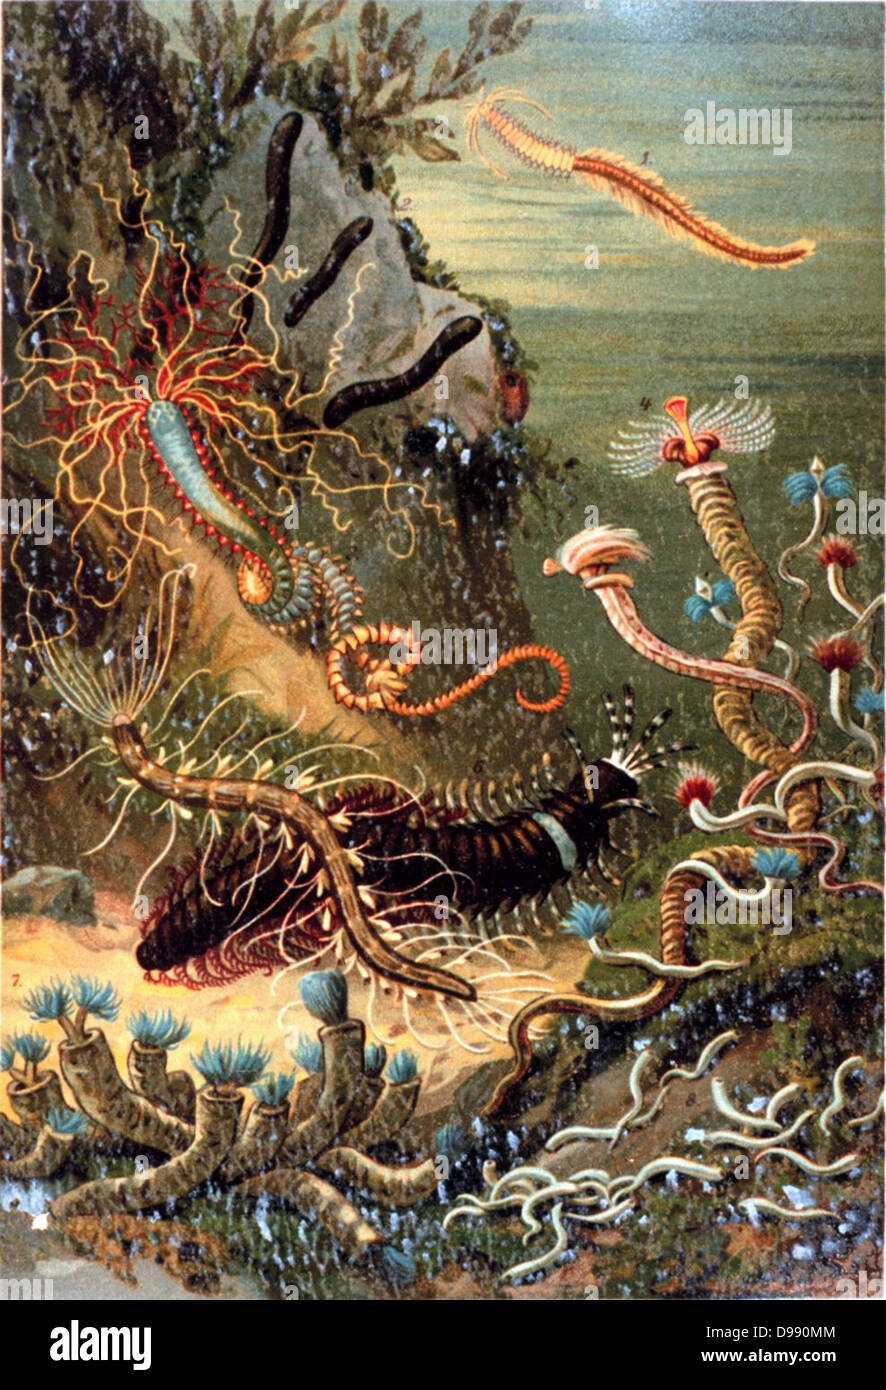 Borstenwurmer des Meeres. A variety of marine worms. In: 'Das Meer' by Matthias Jacob Schleiden, 1804-1881. 1888. Stock Photo